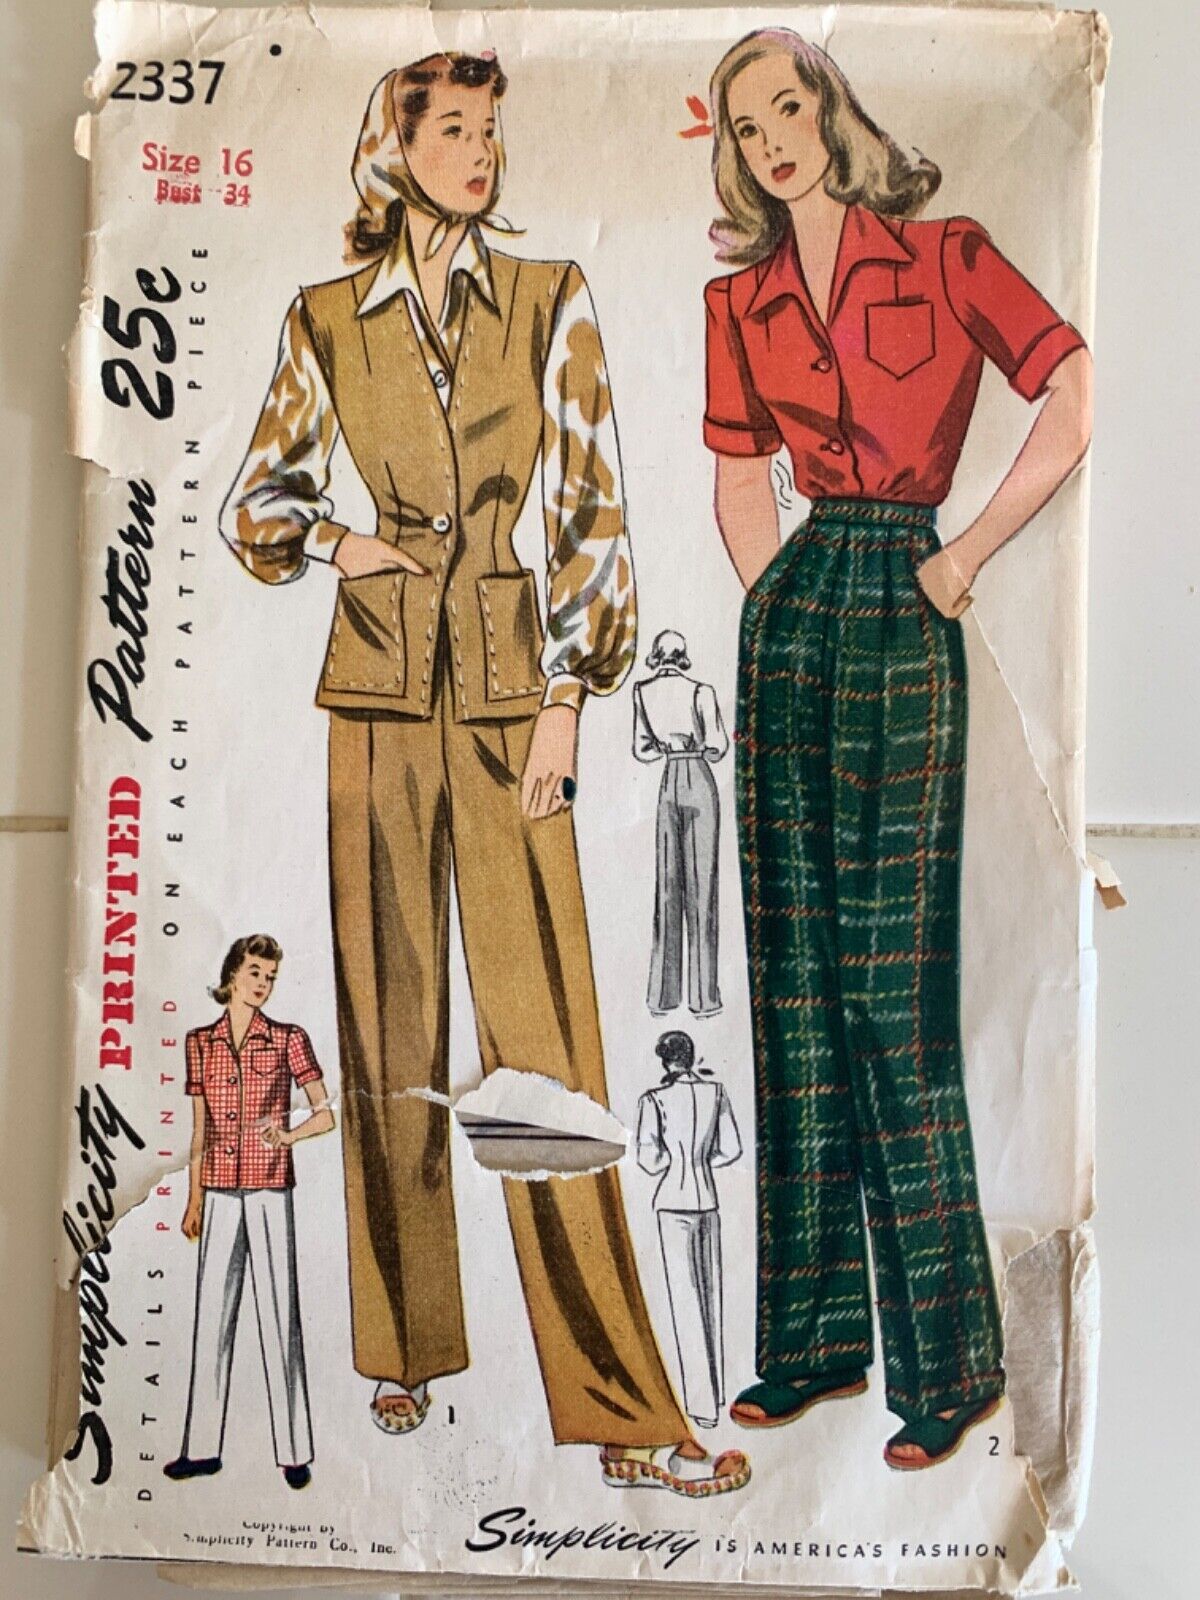 Vintage 1940s-50s Simplicity 2337 Size 16, Bust 34 Slacks and Jerkin